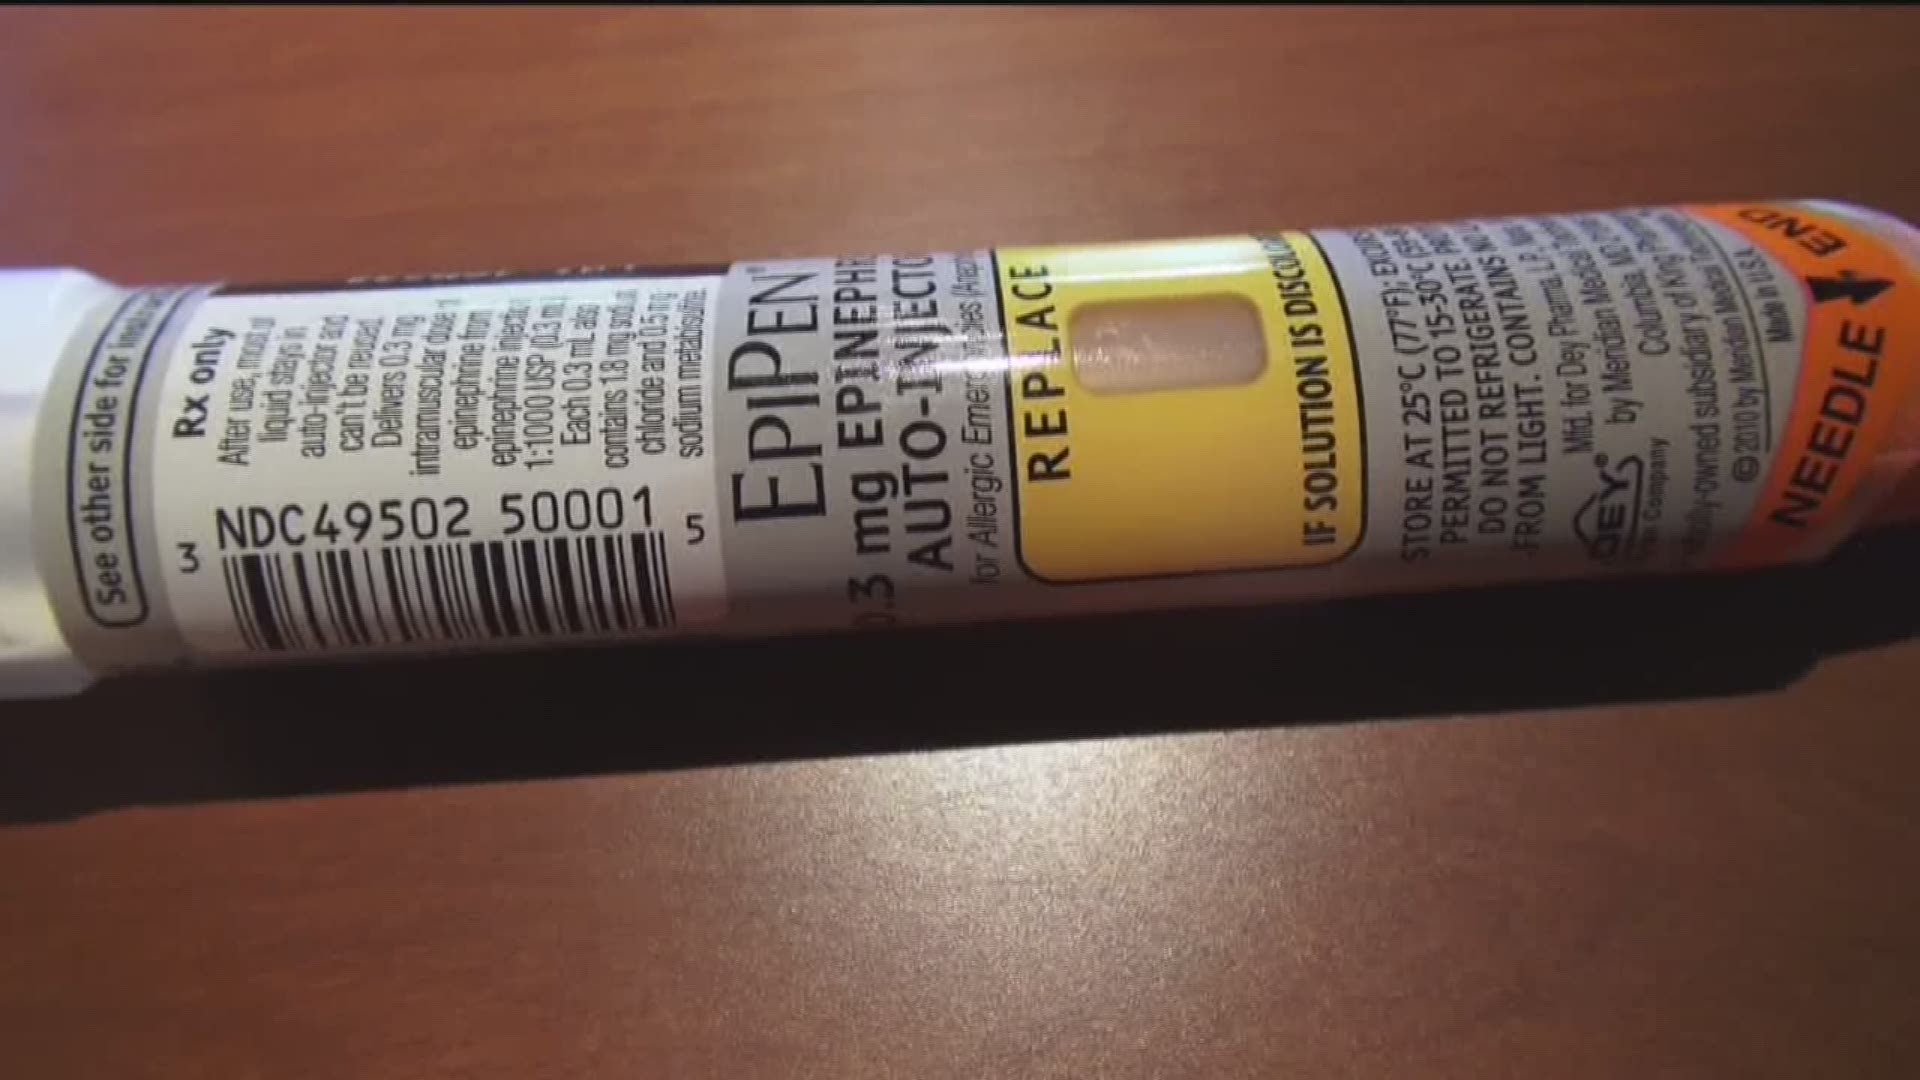 Price of EpiPens increasing